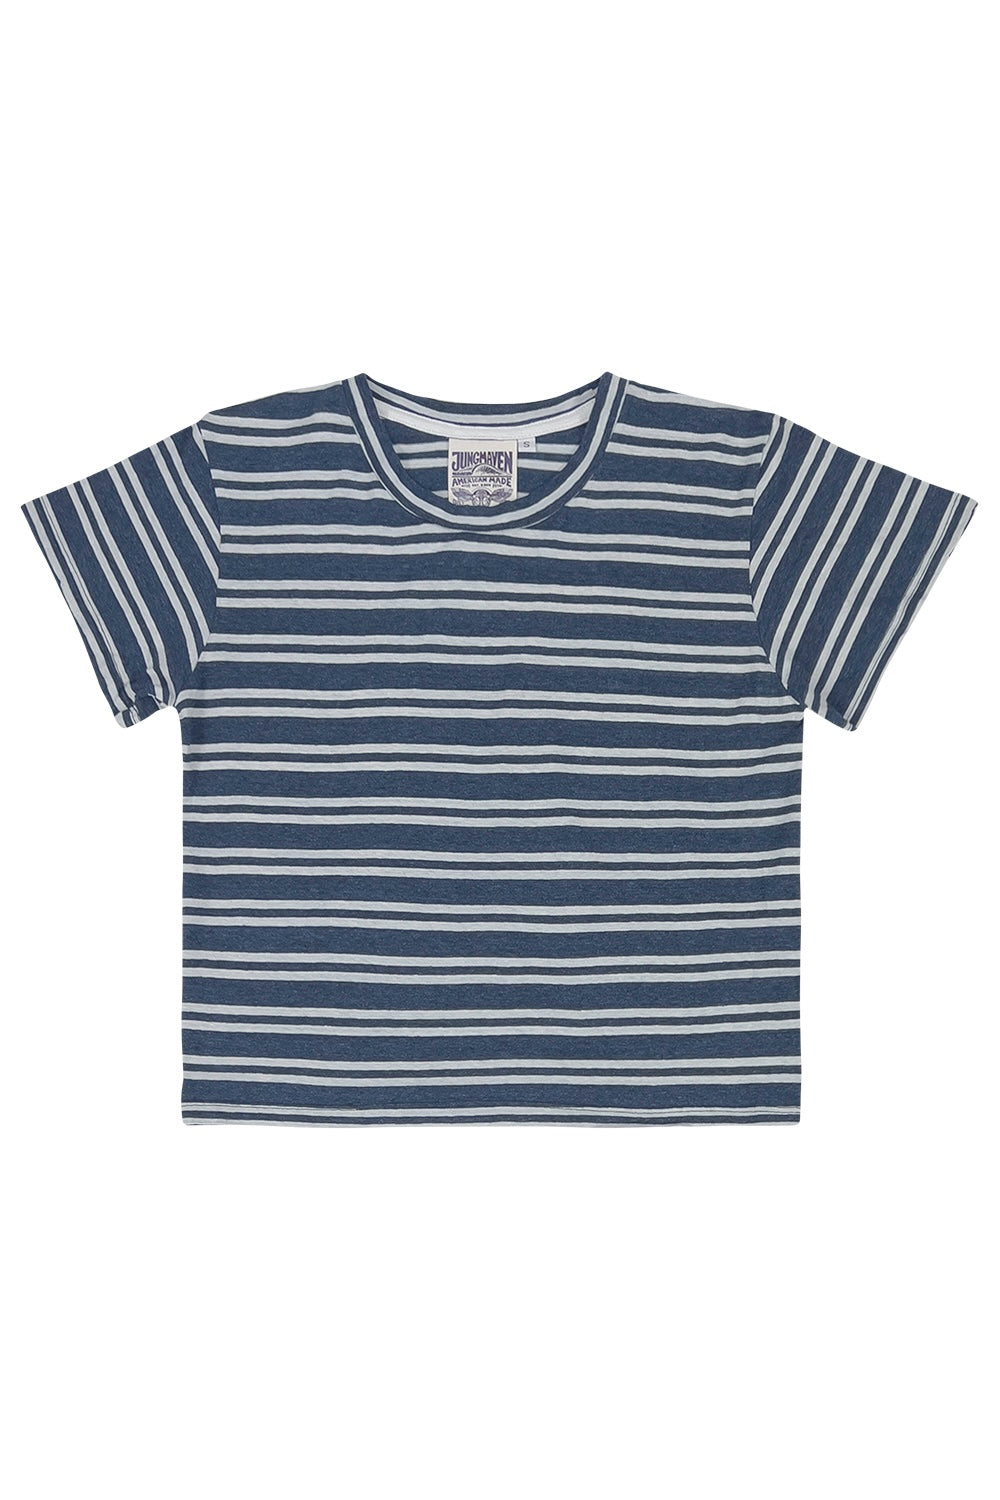 Stripe Cropped Lorel Tee | Jungmaven Hemp Clothing & Accessories / Color: Blue/White Stripe